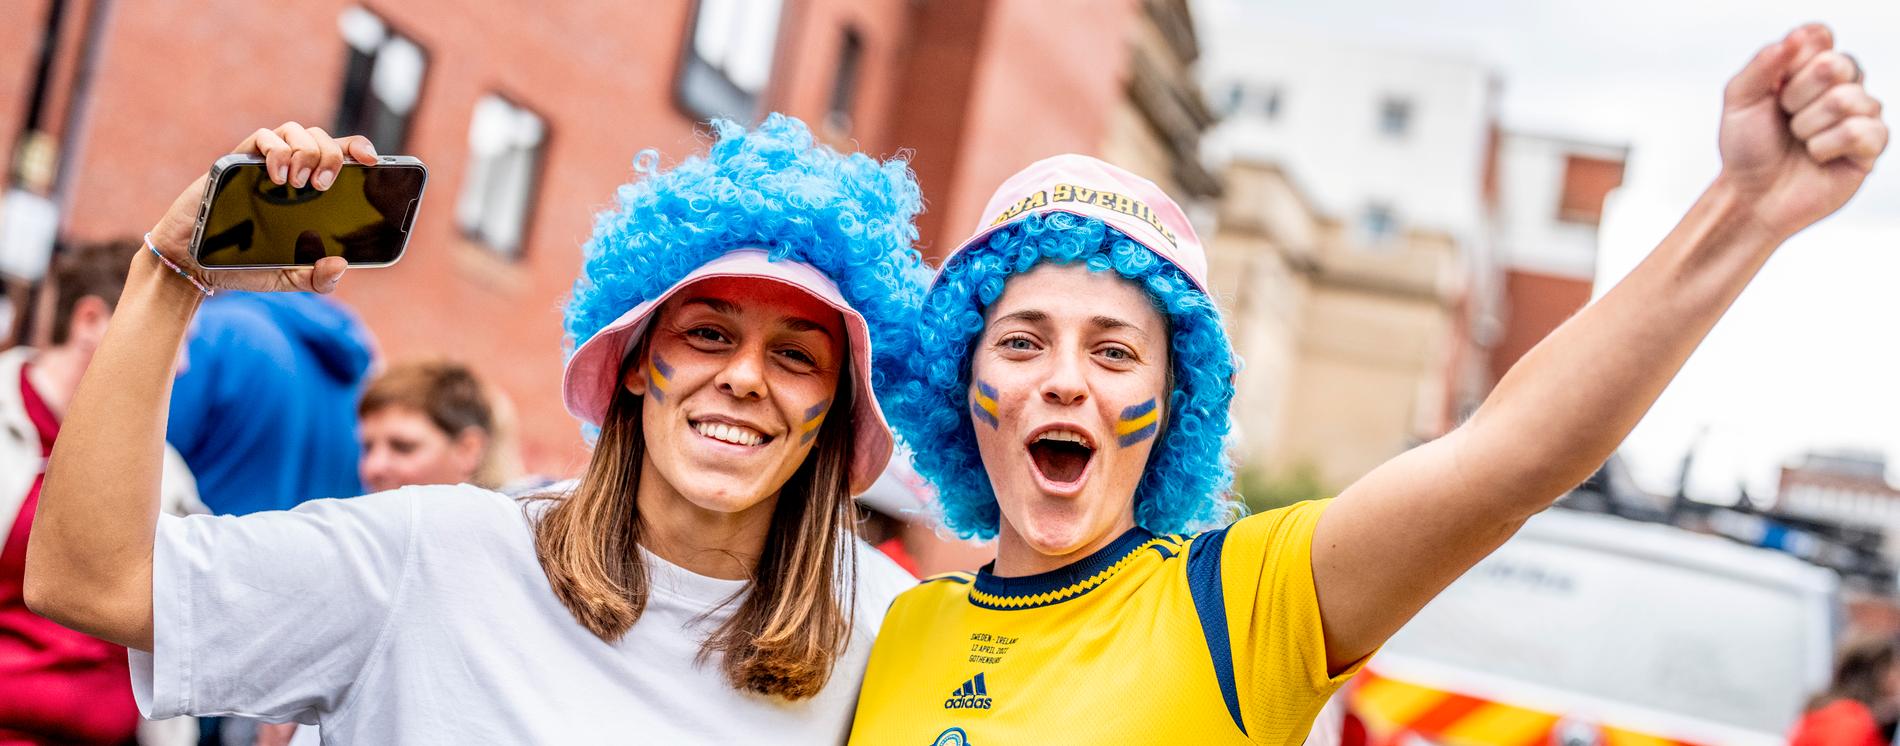 Aurora Galli och Lisa Boattin under fotbolls-EM i England